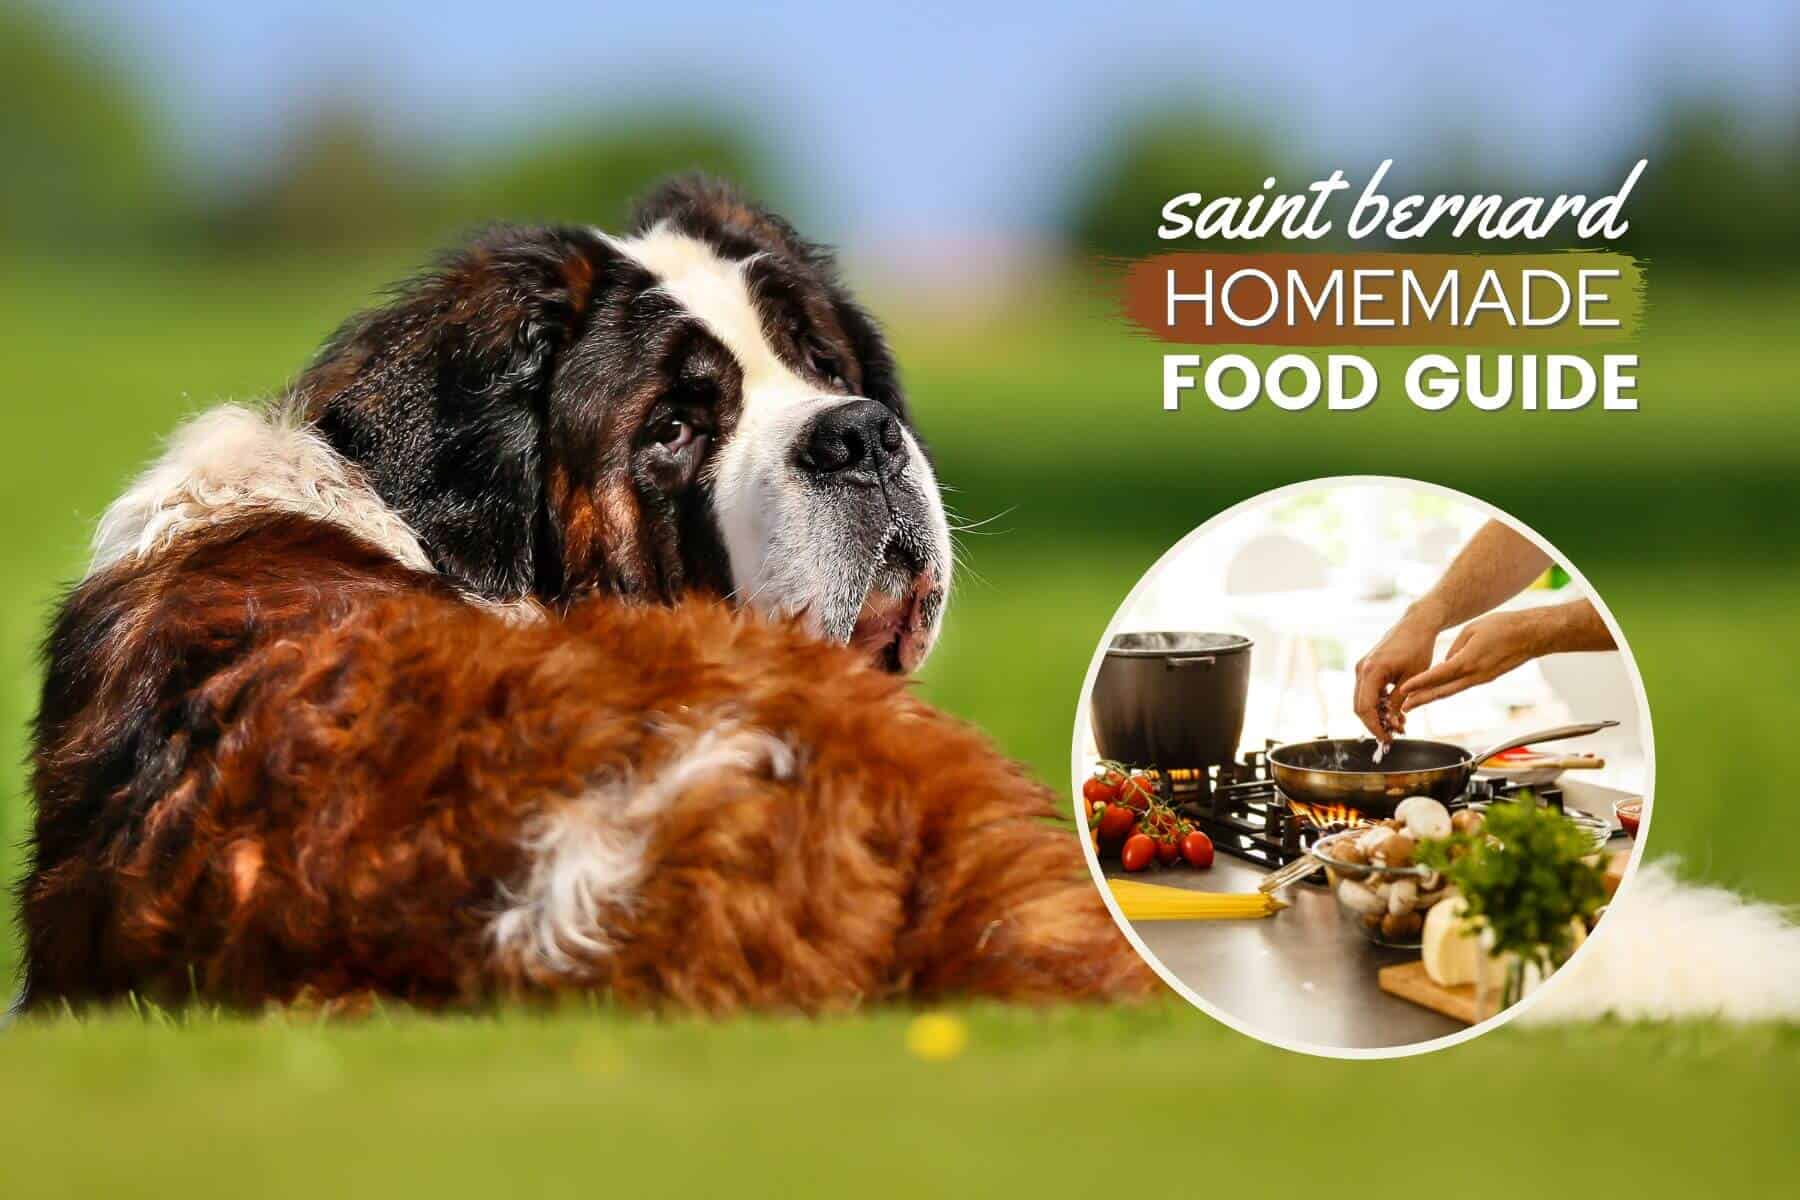 Saint Bernard homemade dog food